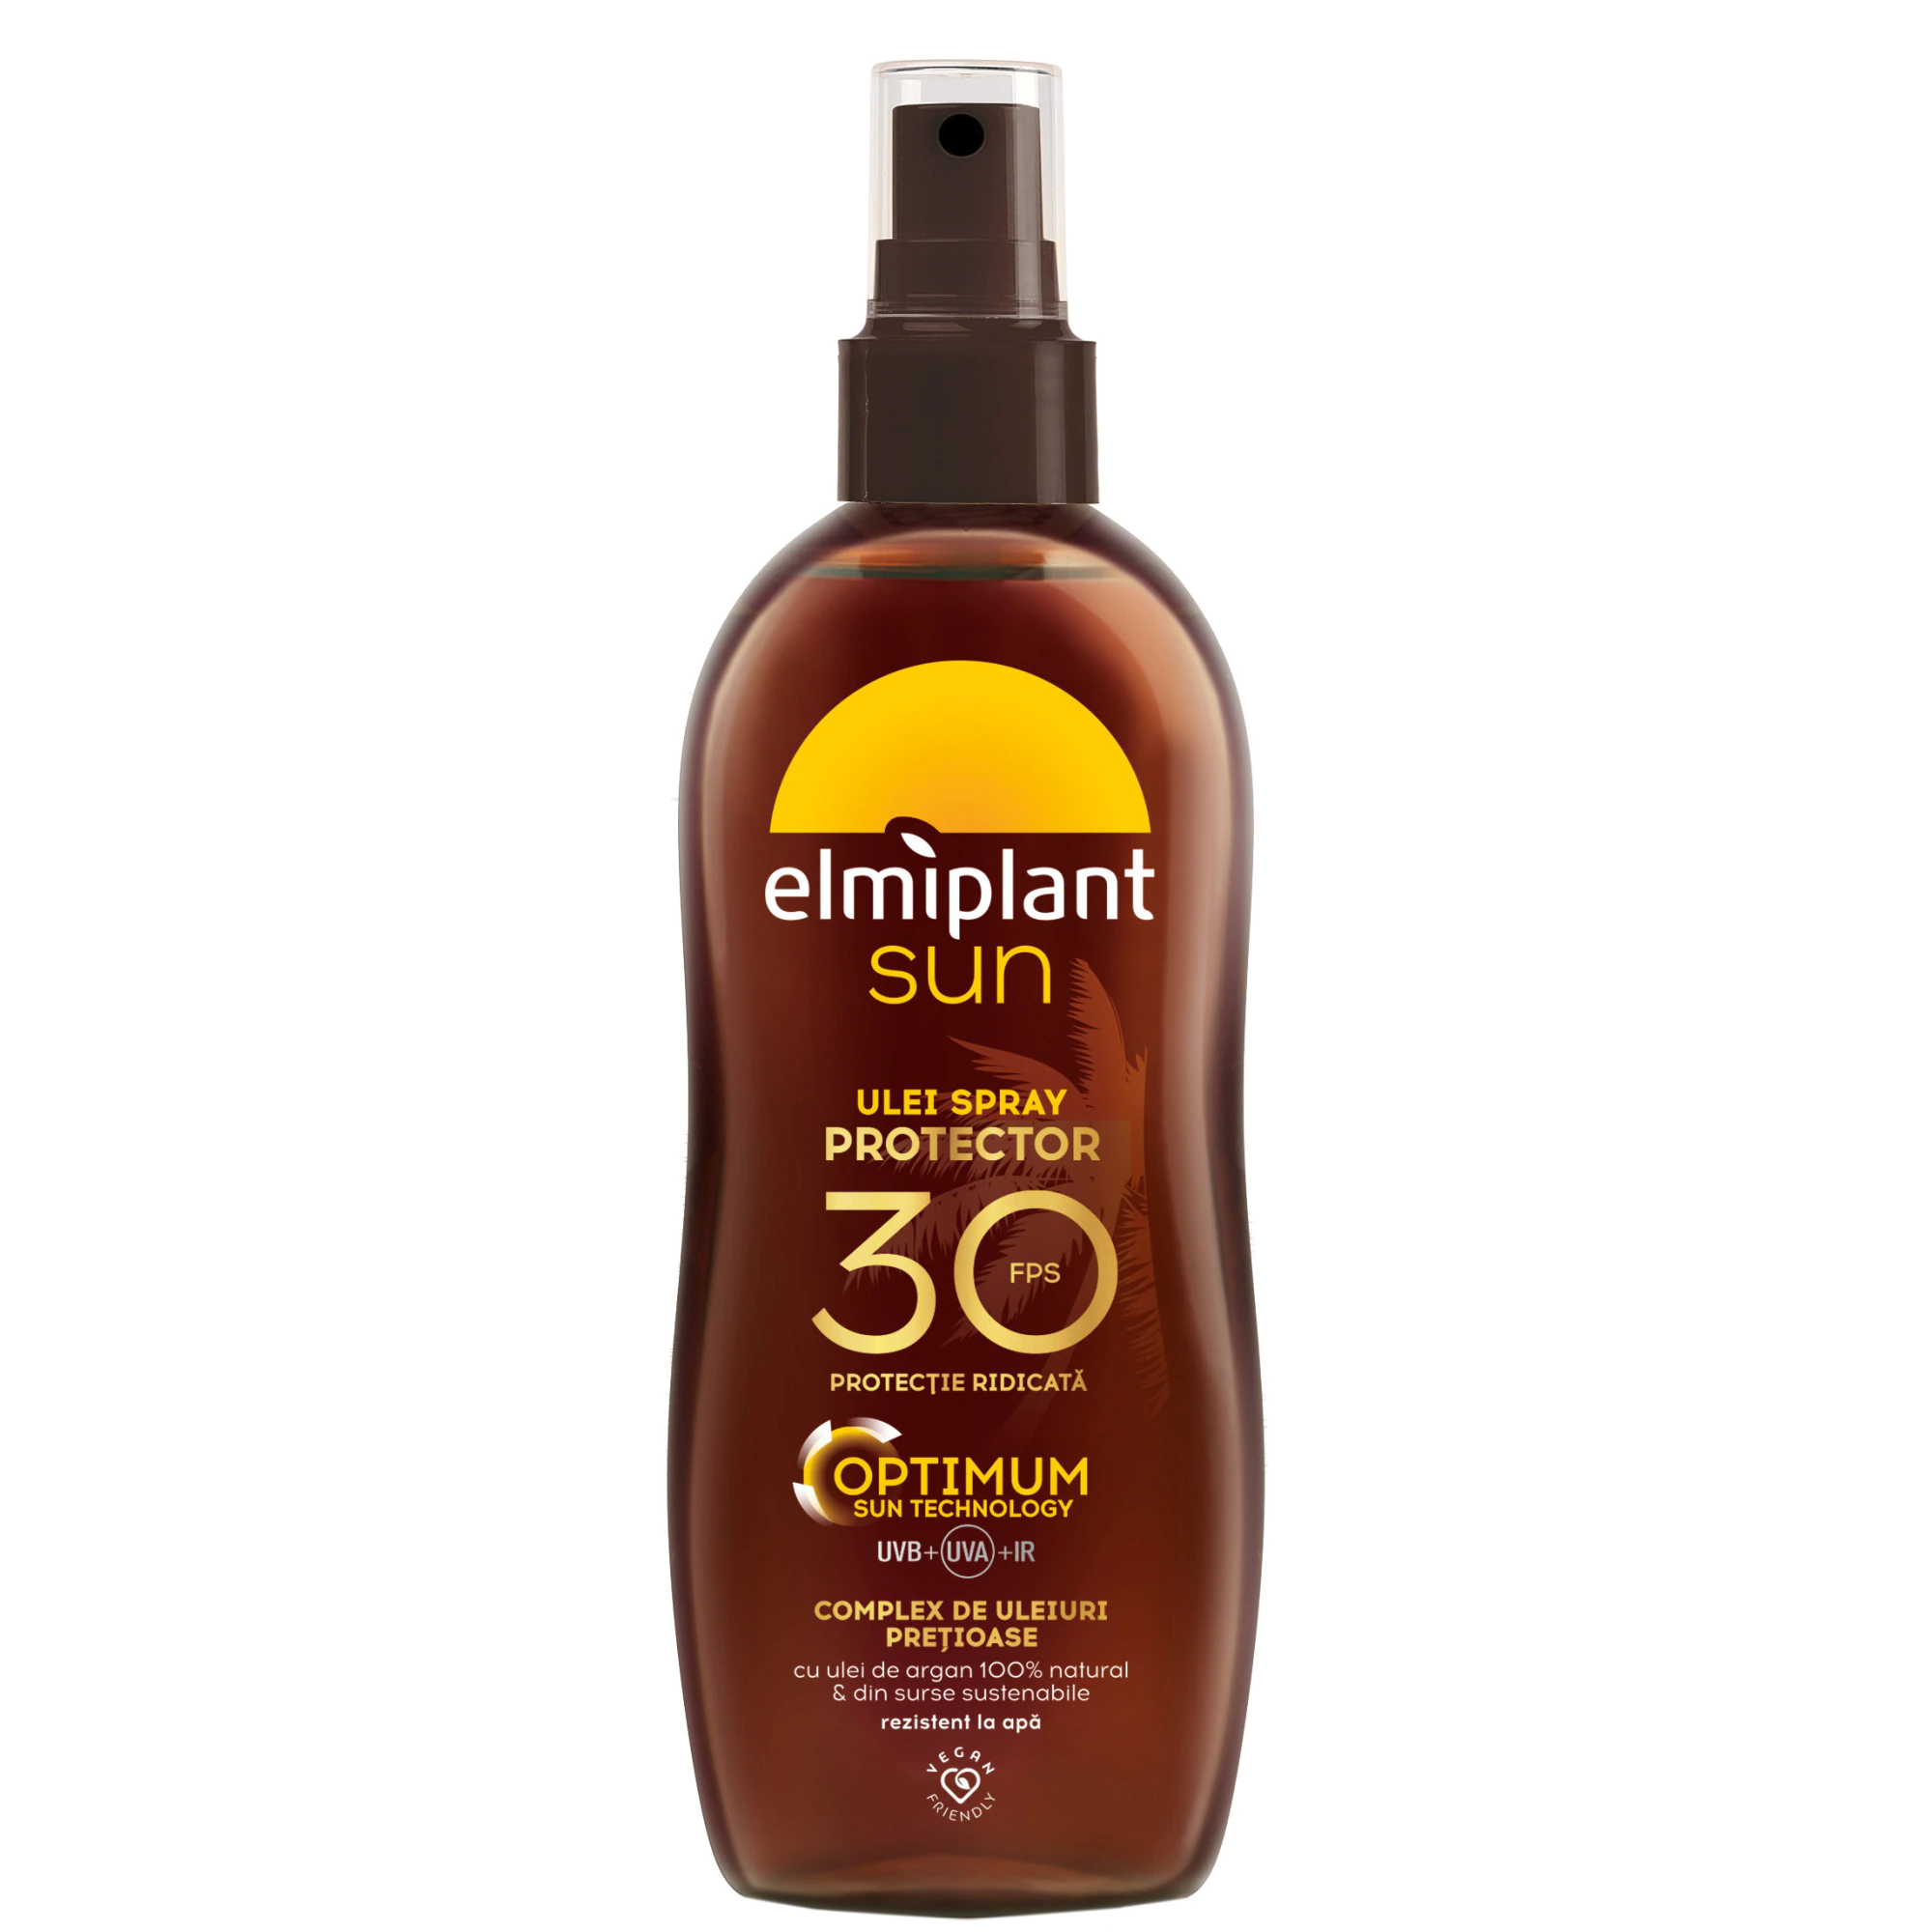 Ulei spray pentru protectie ridicata SPF 30 Optimum Sun, 150 ml